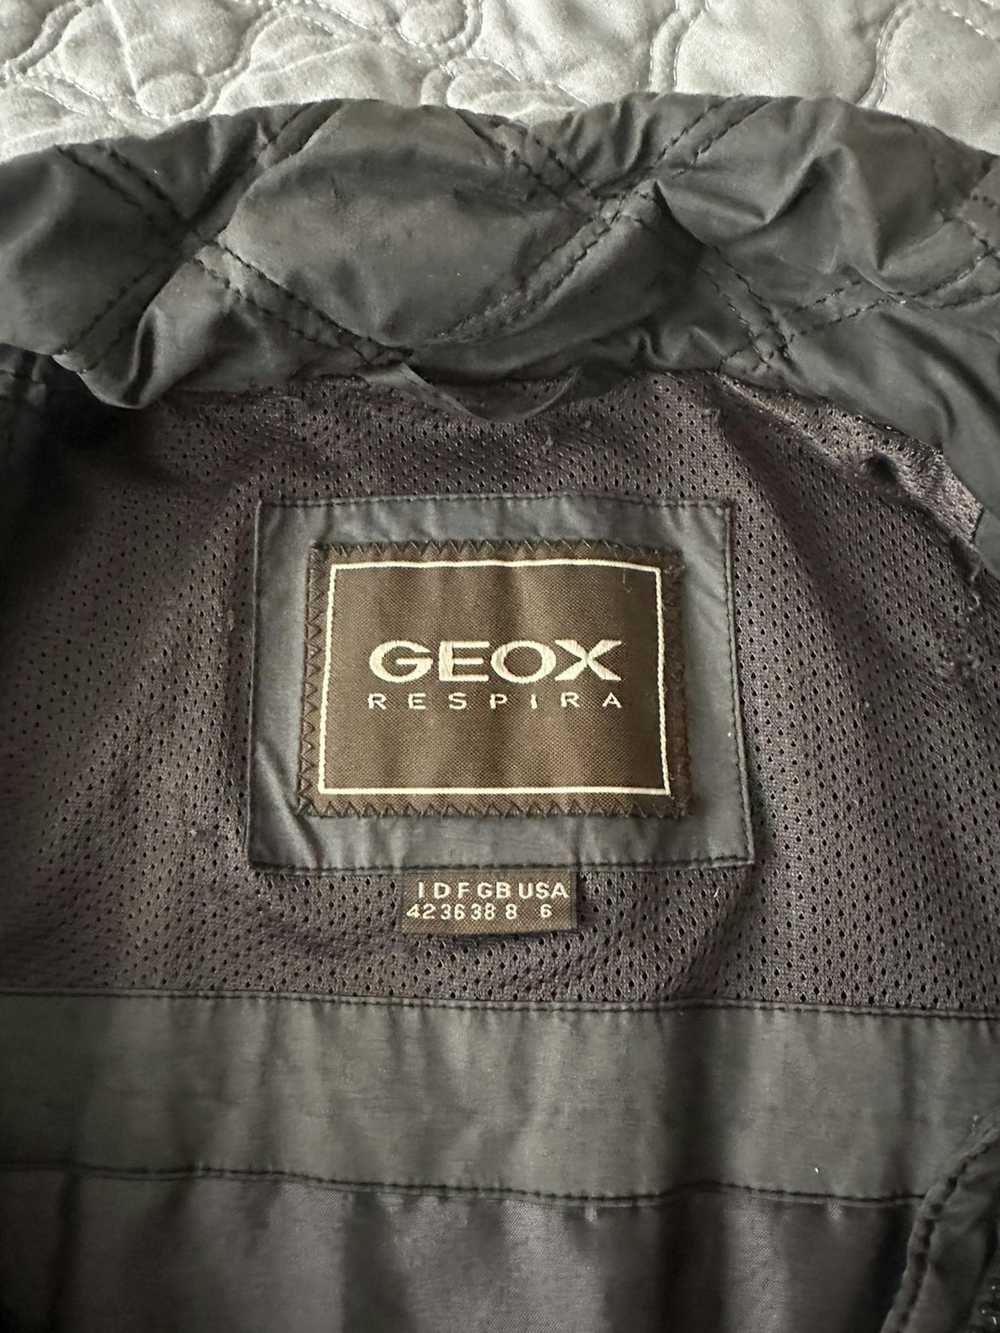 Geox Geox Respira Stone-washed Women’s Coat - image 2